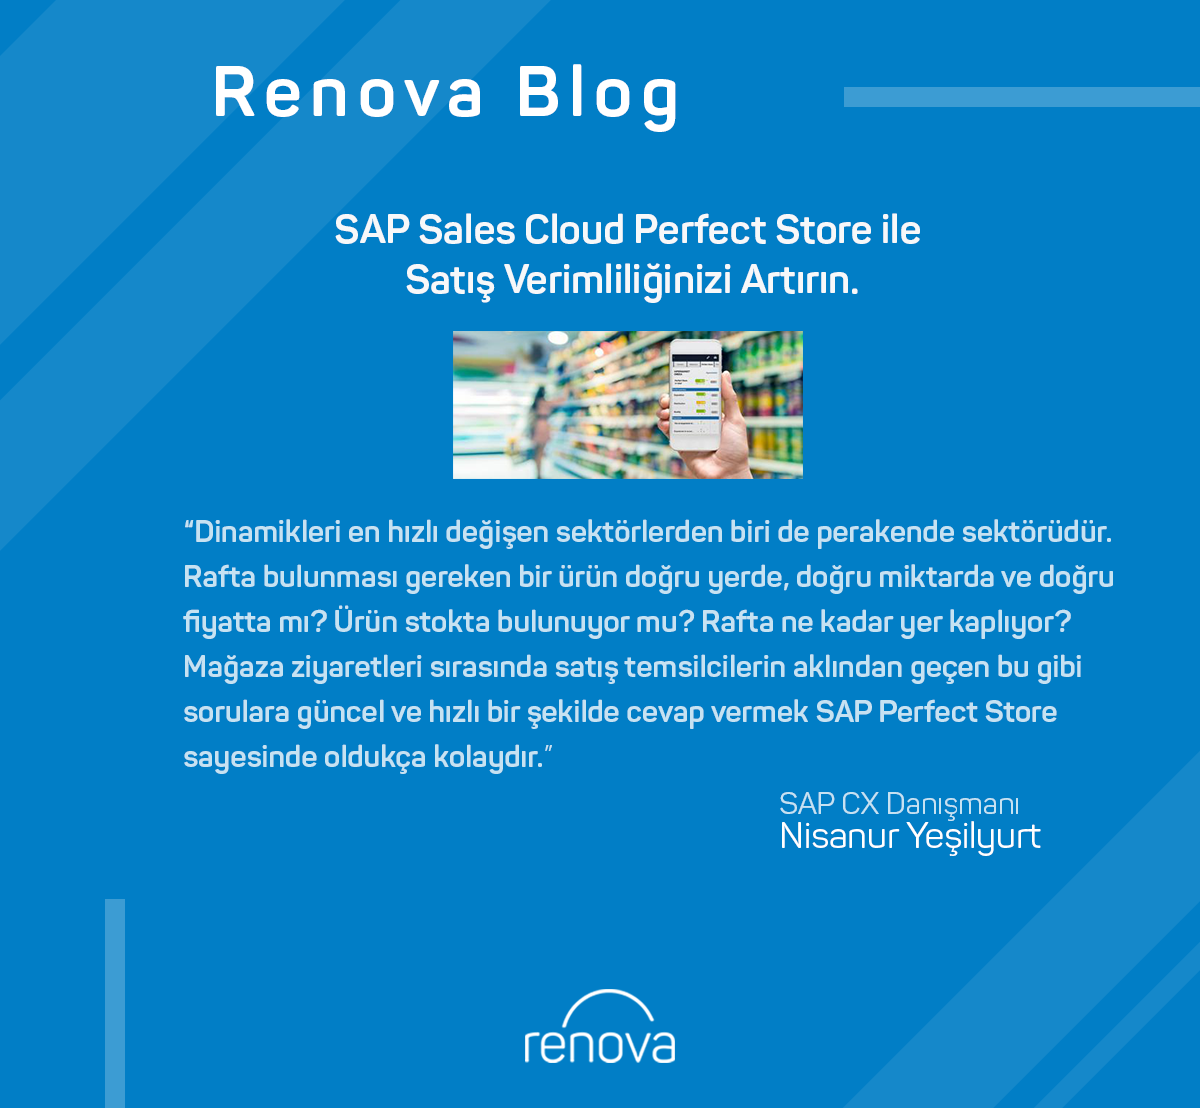 SAP Sales Cloud Perfect Store ile Satış Verimliliğinizi Artırın